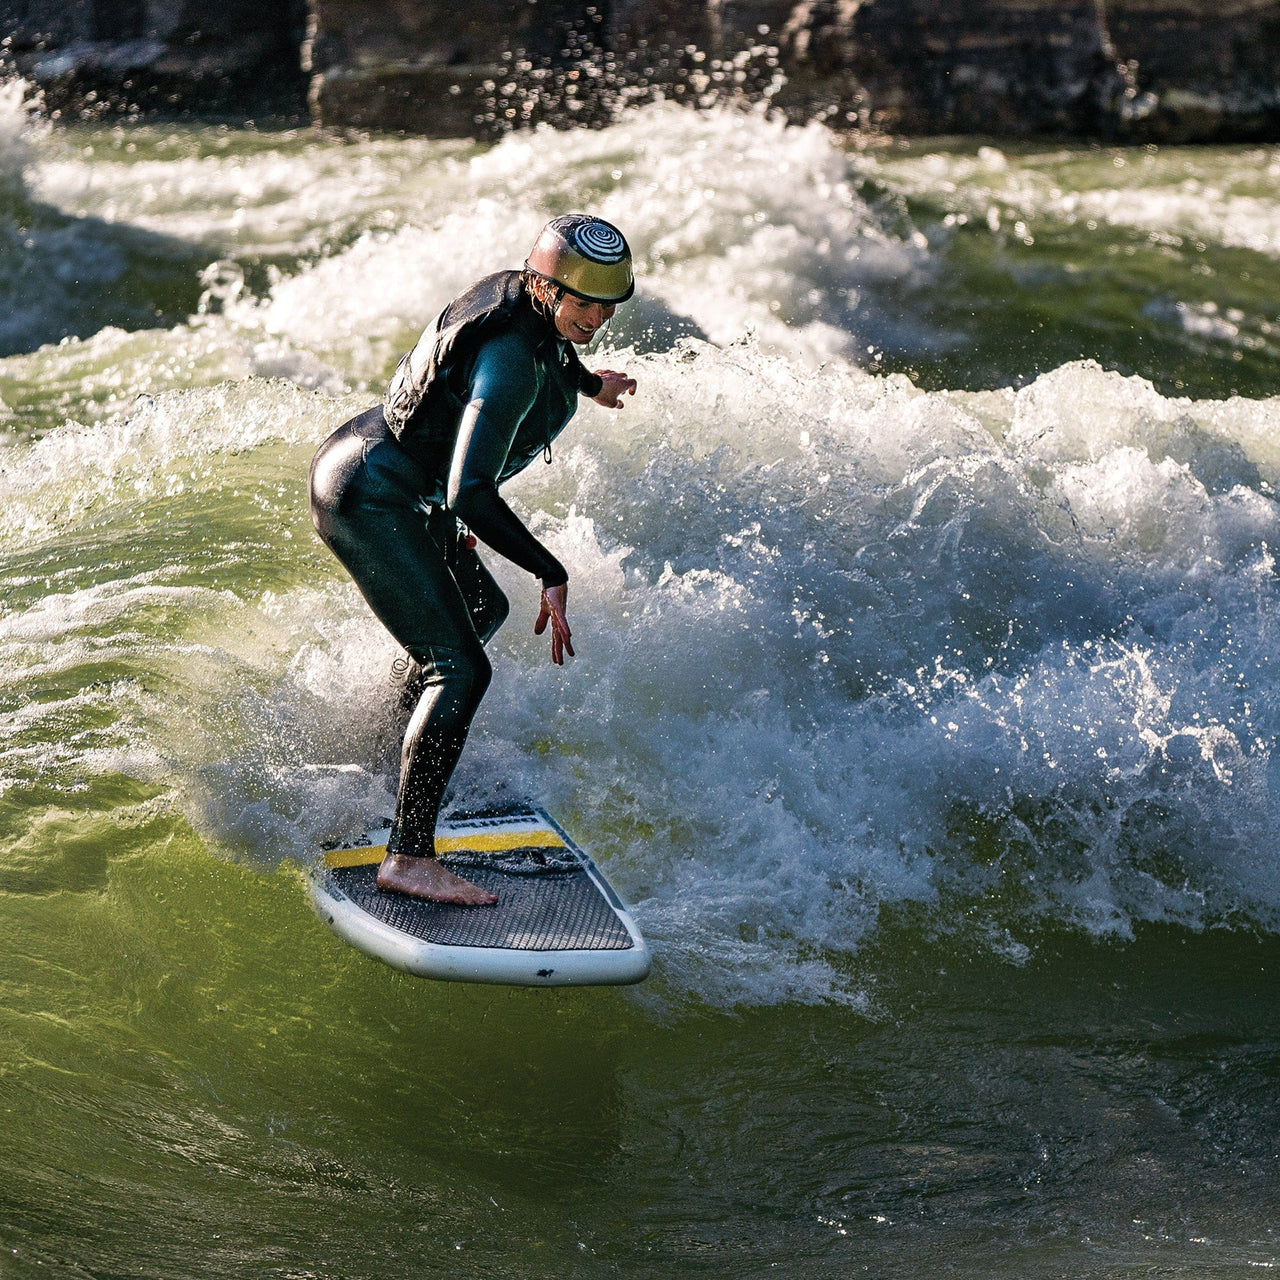 Badfish iSK8 Inflatable River Surfboard - Good Wave